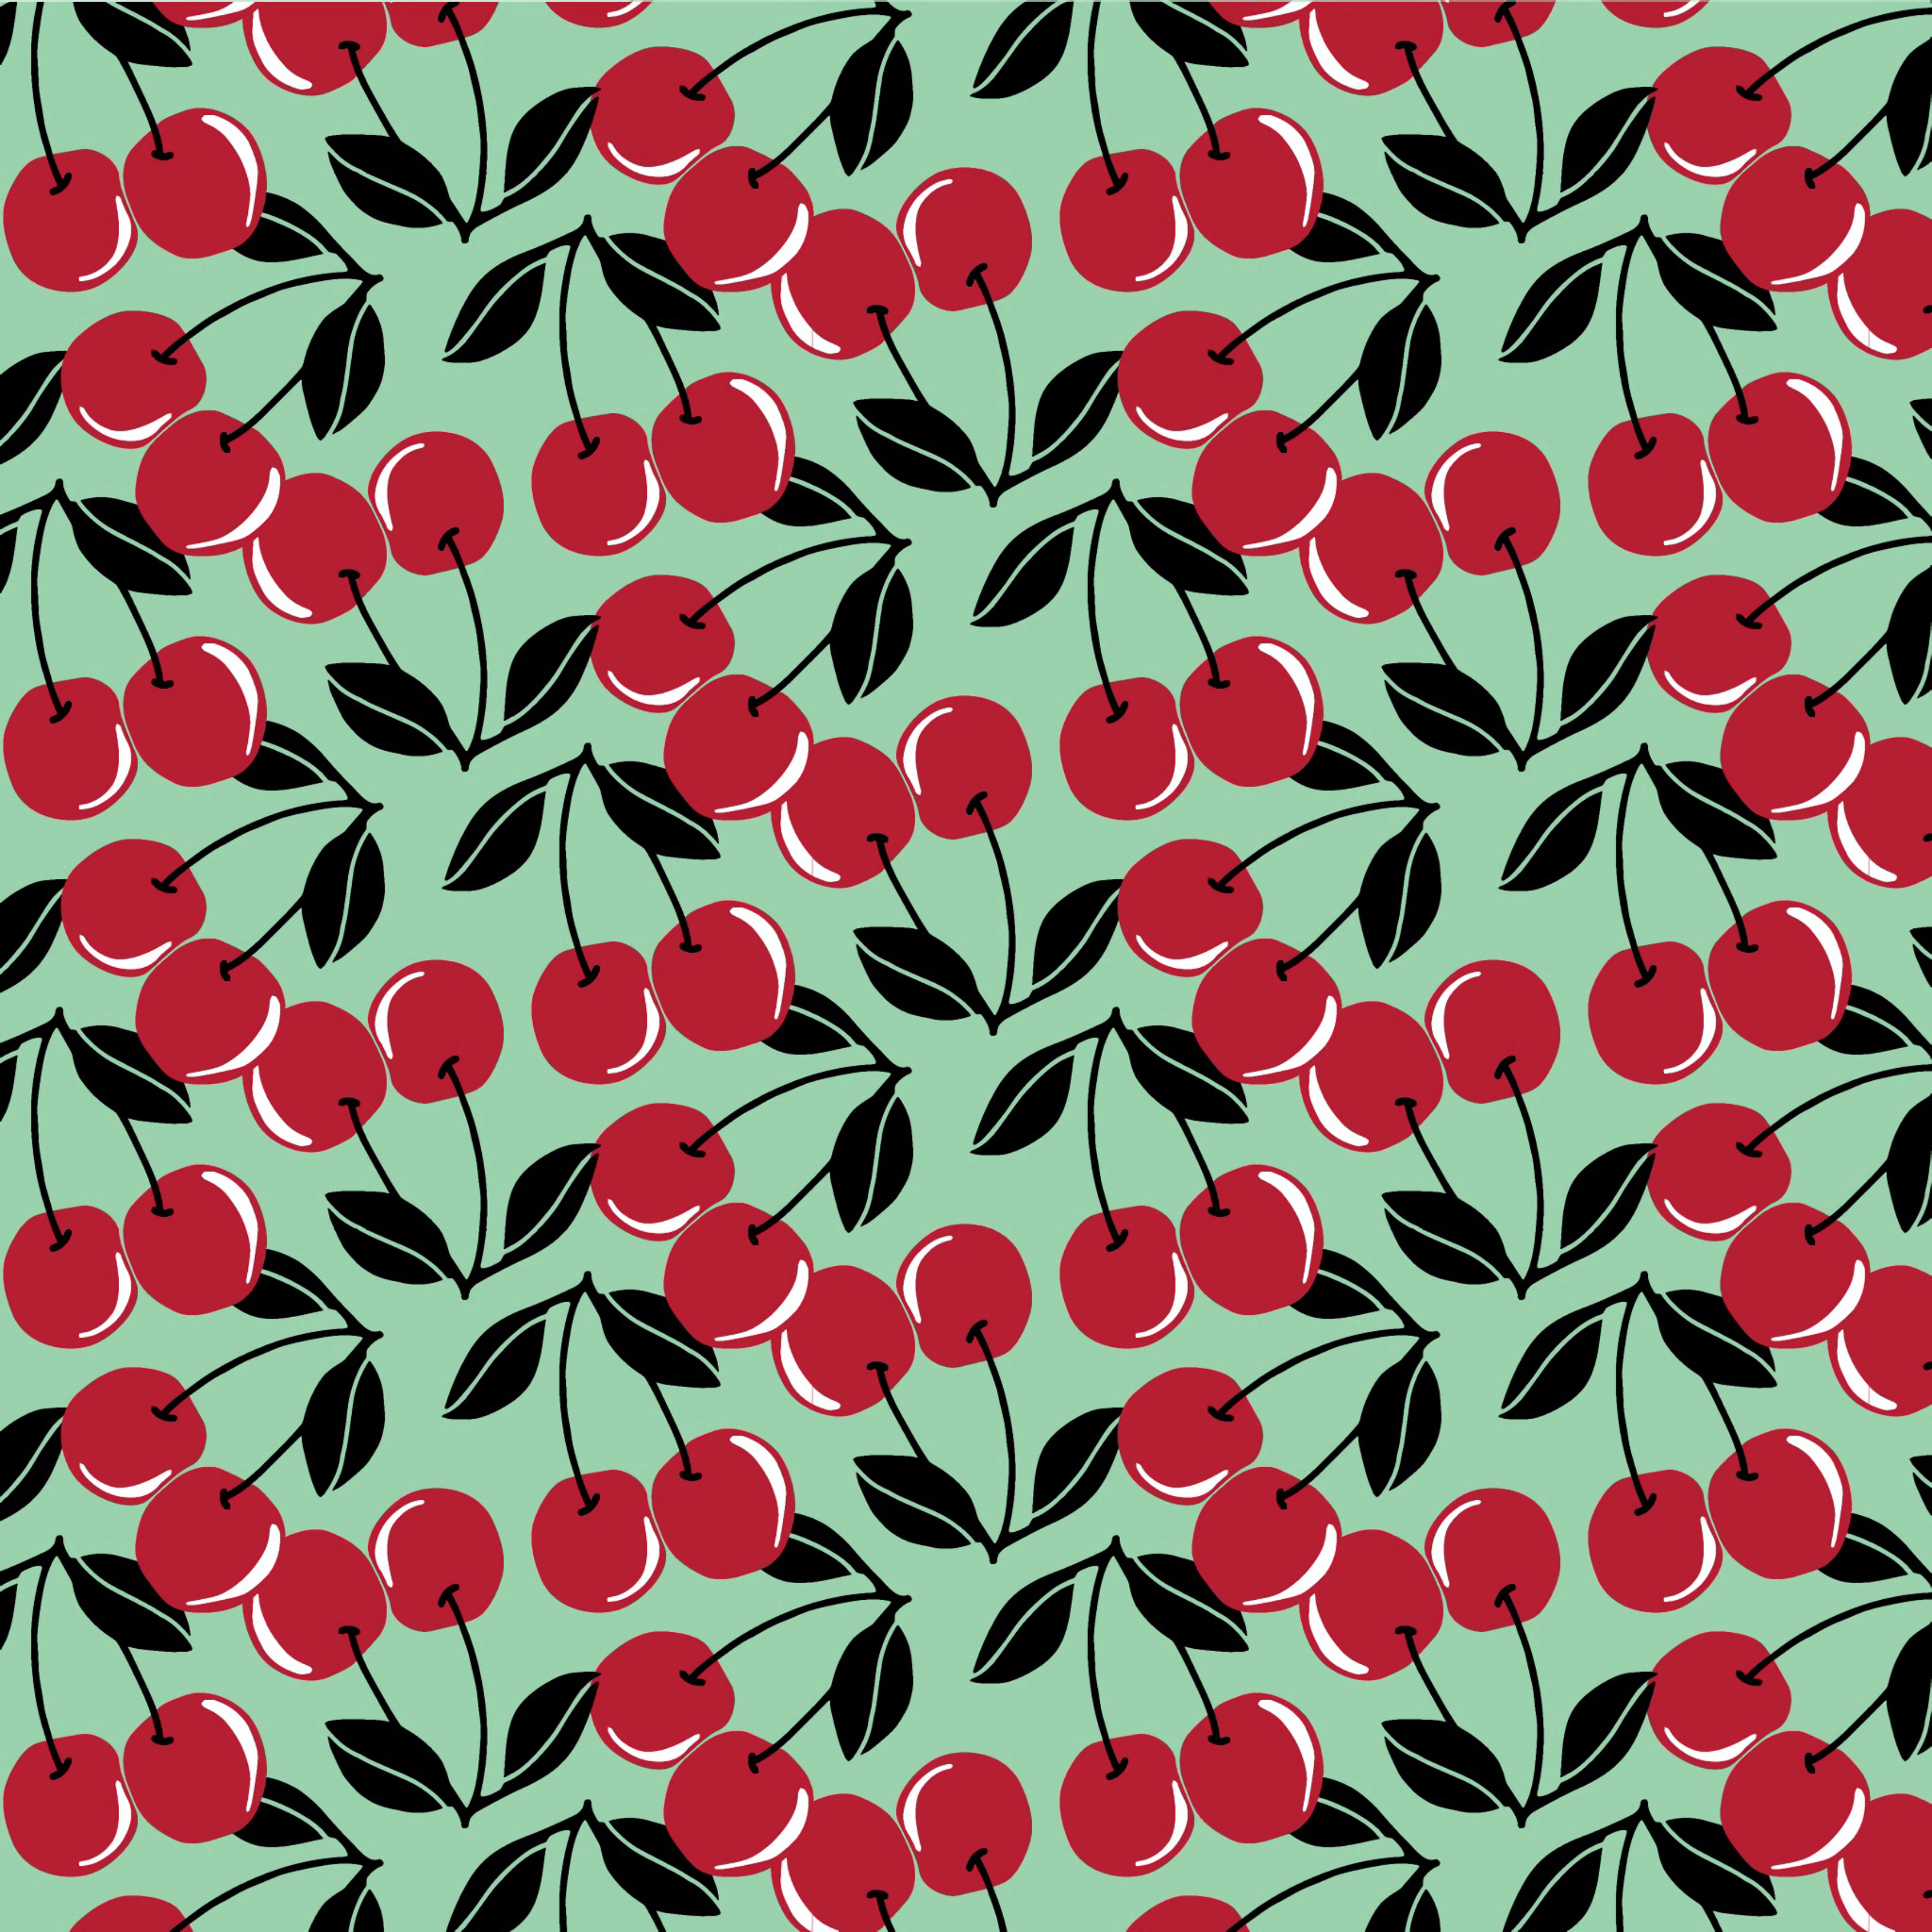 textures, fruits, leaves, berries, red, pattern, texture, cherries, petioles